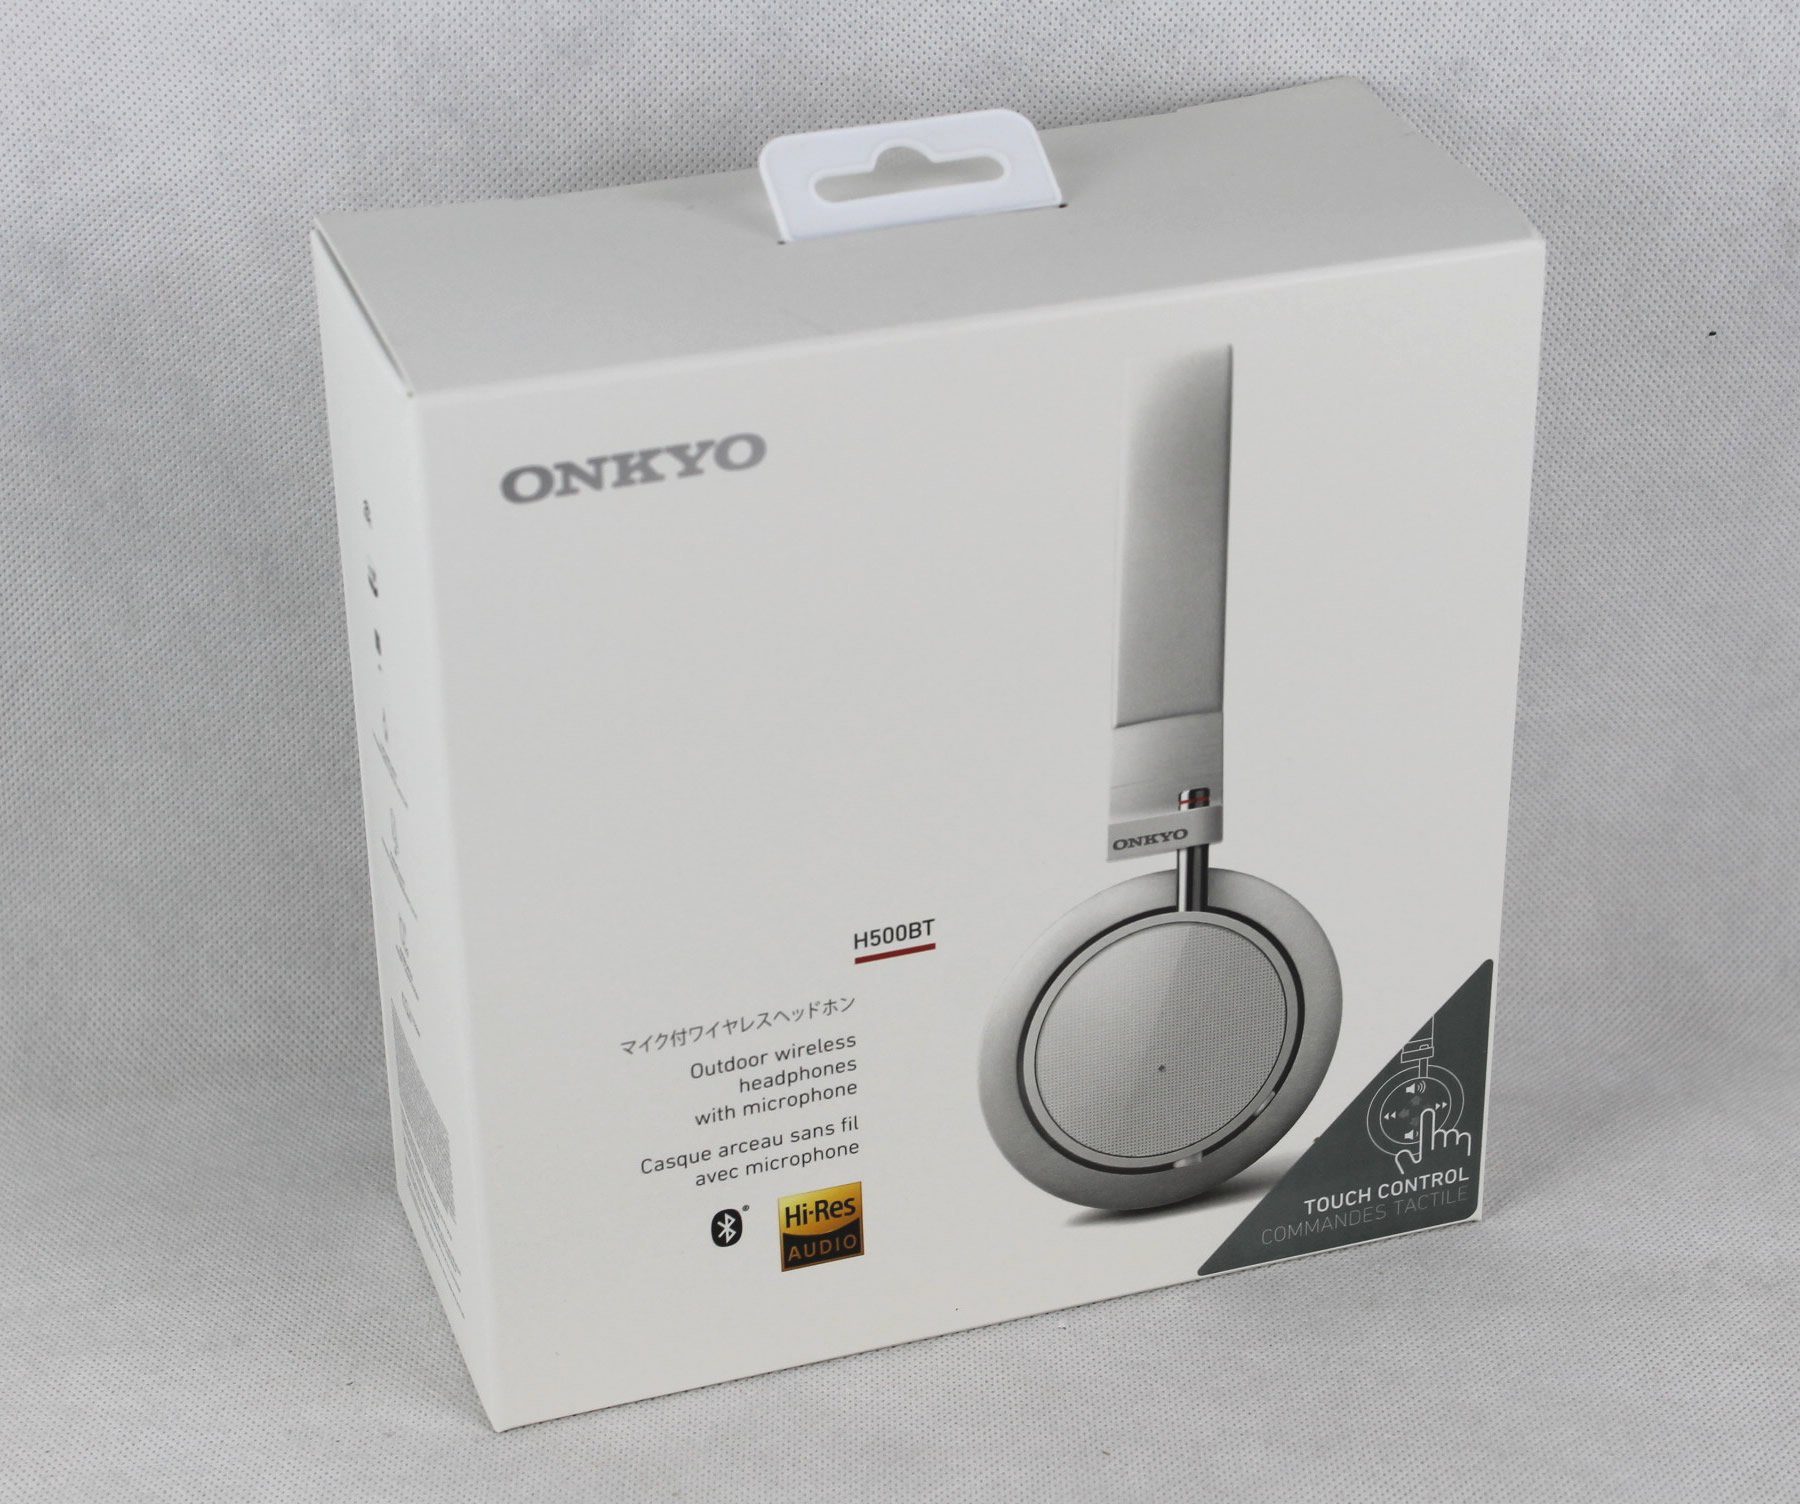 Mikrofon mit H500BT On-Ear Bluetooth-Kopfhörer Bluetooth-Kopfhörer Onkyo